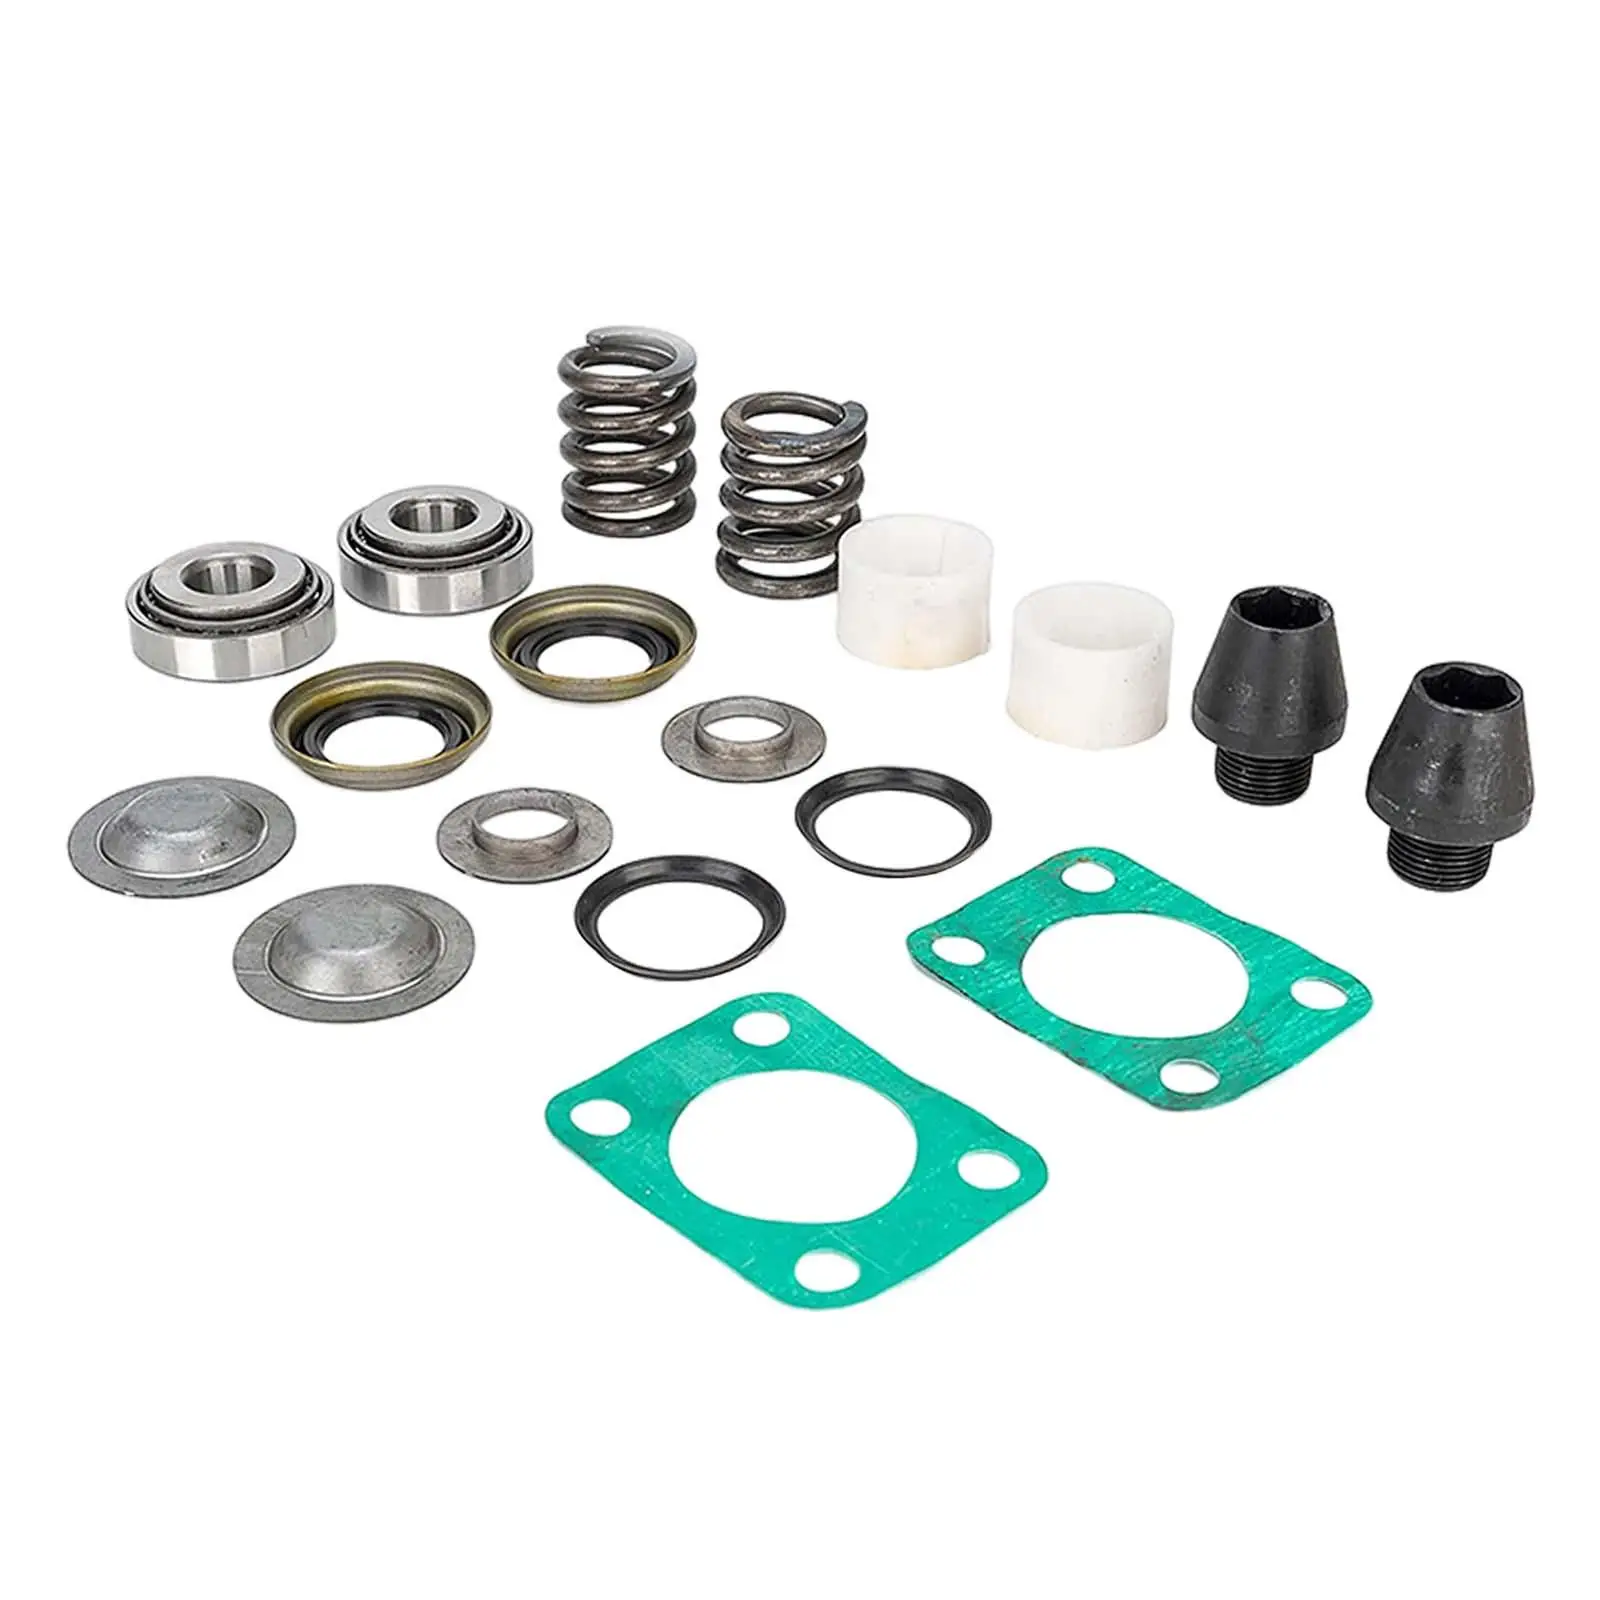 Kingpin Bearing Seal Rebuild Kit 706395x Replace Parts 37300 37307 706395 for Dodge Dana 60 Automotive Accessories Durable